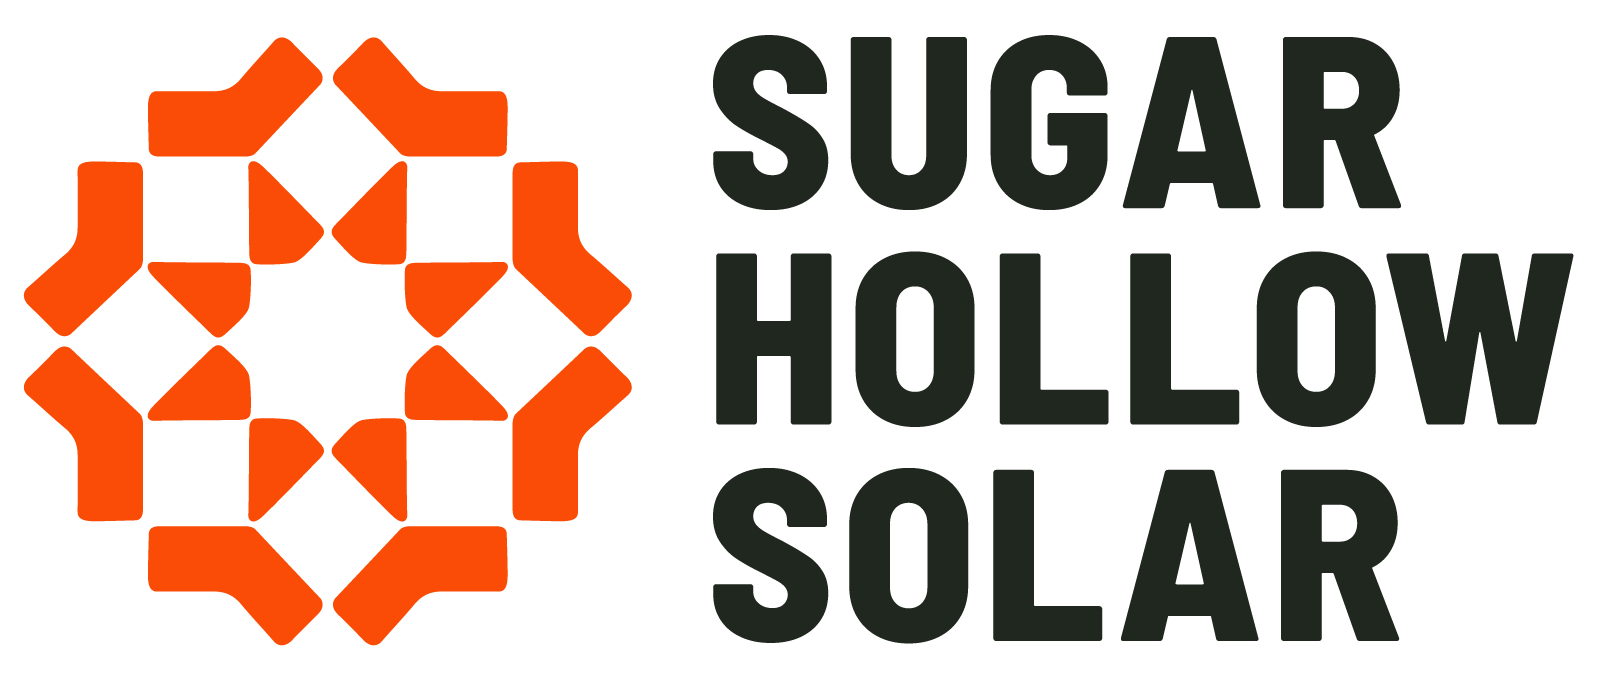 SH-Solar-Vertical-Orange-and-Black@2x-100